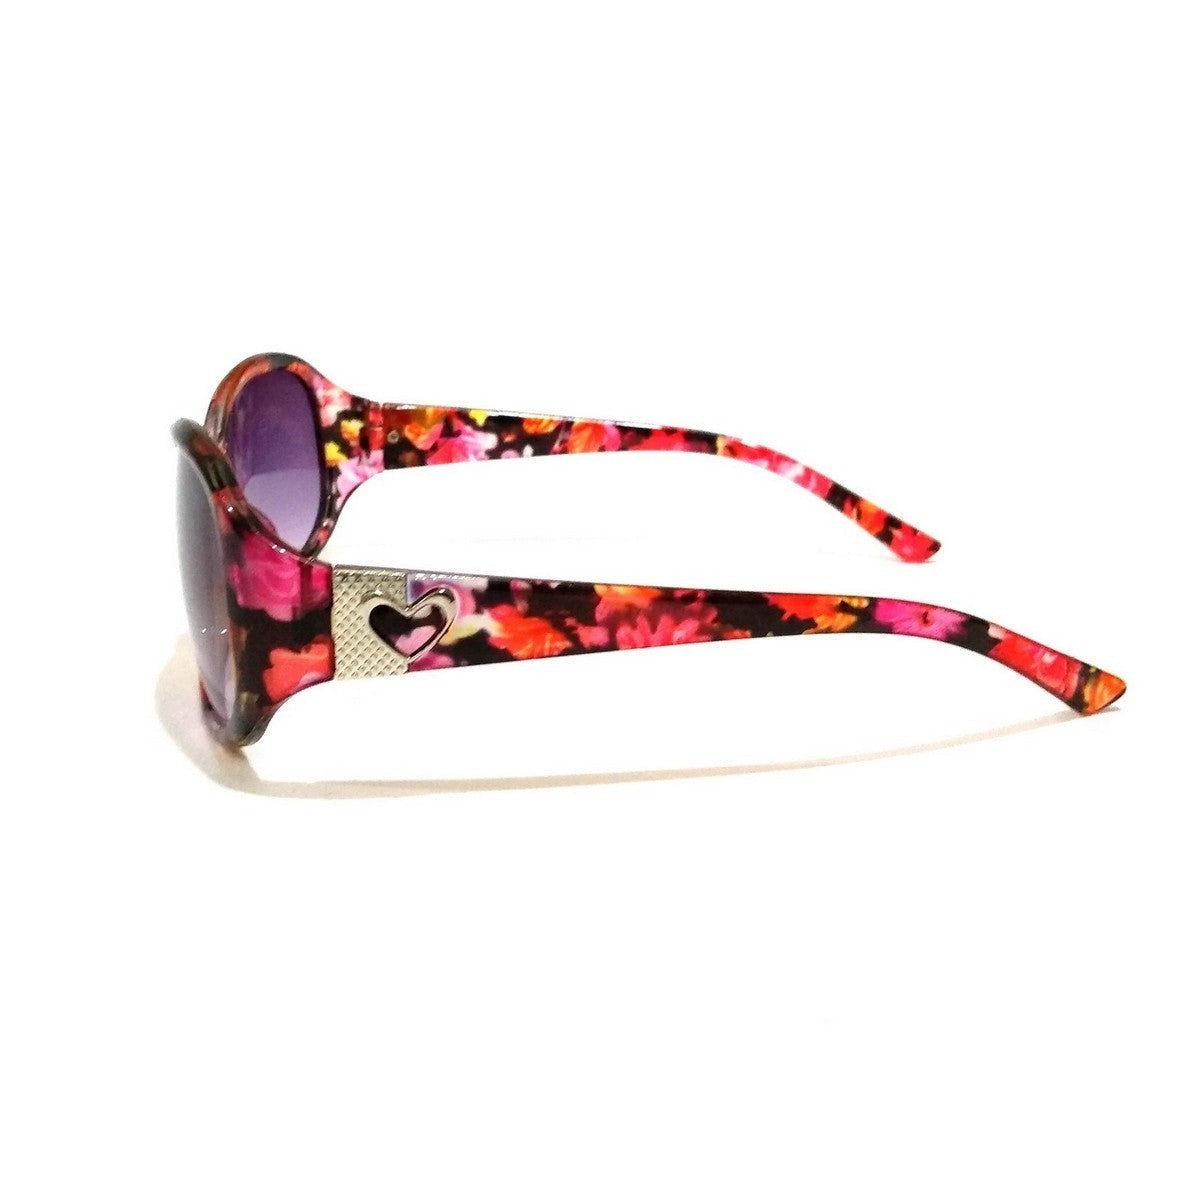 Floral Print Ladies Sunglasses for Women Model 1141003C4 - Glasses India Online